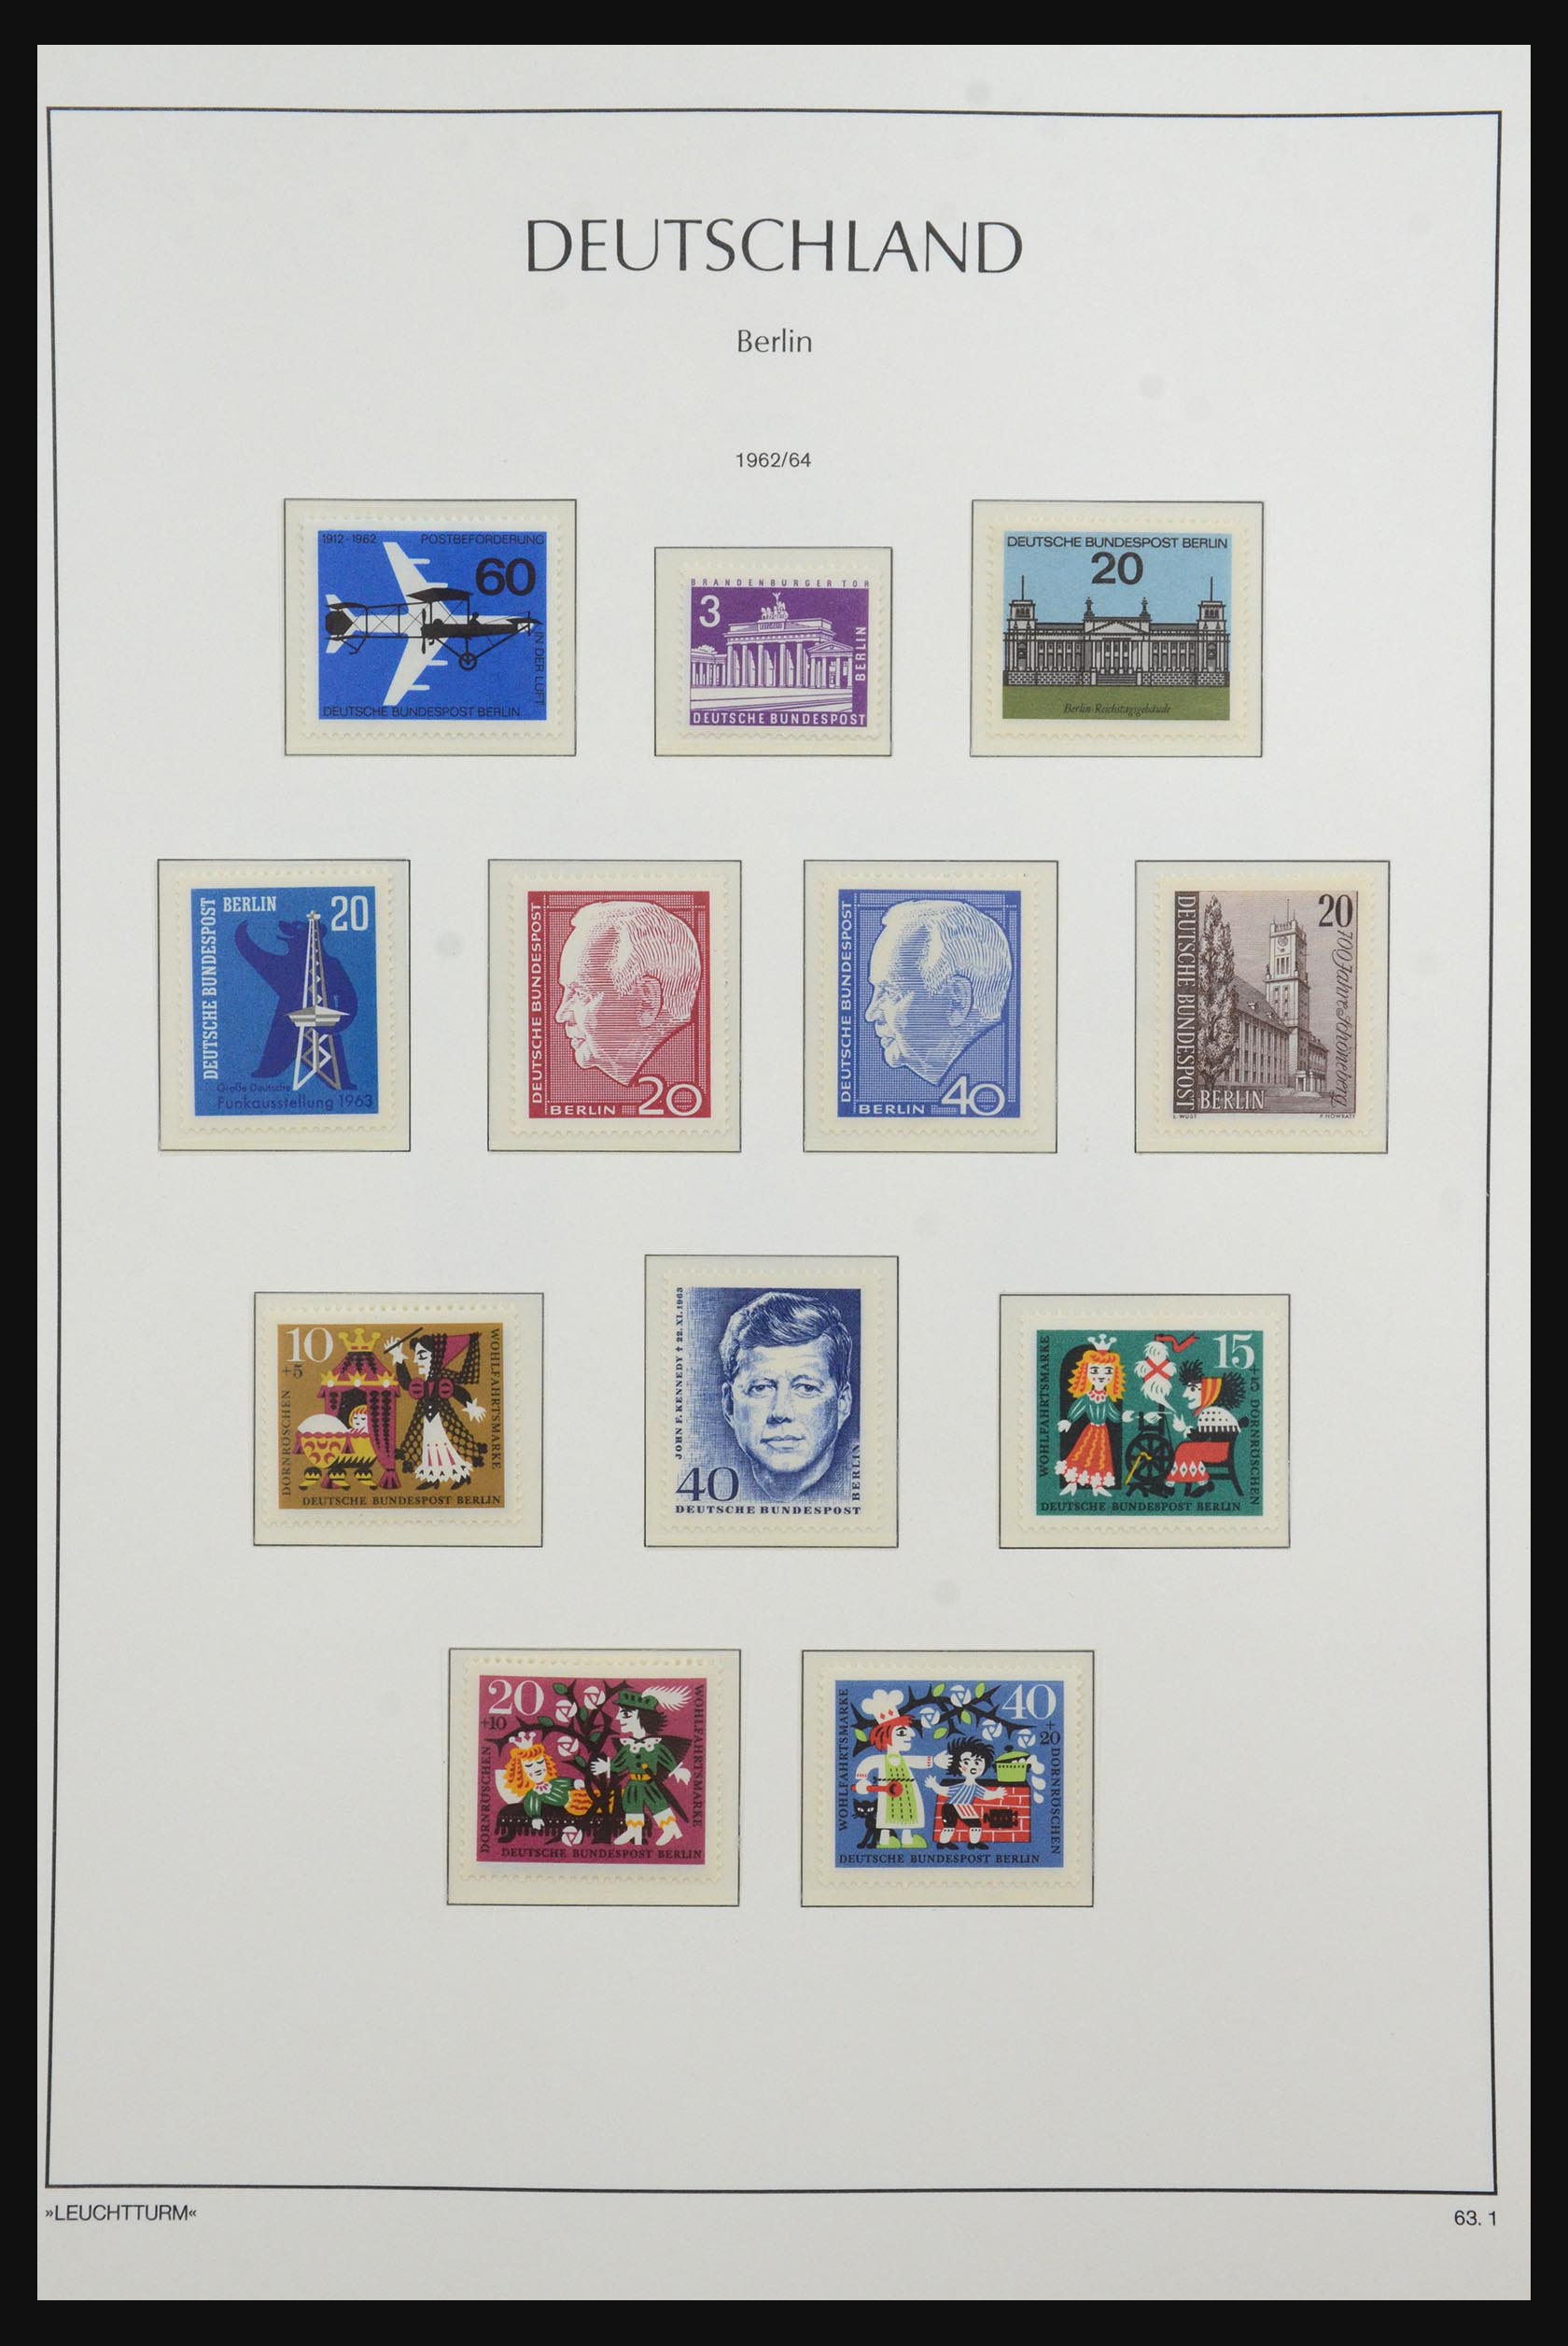 31601 019 - 31601 Bundespost, Berlin and Saar 1948-2008.